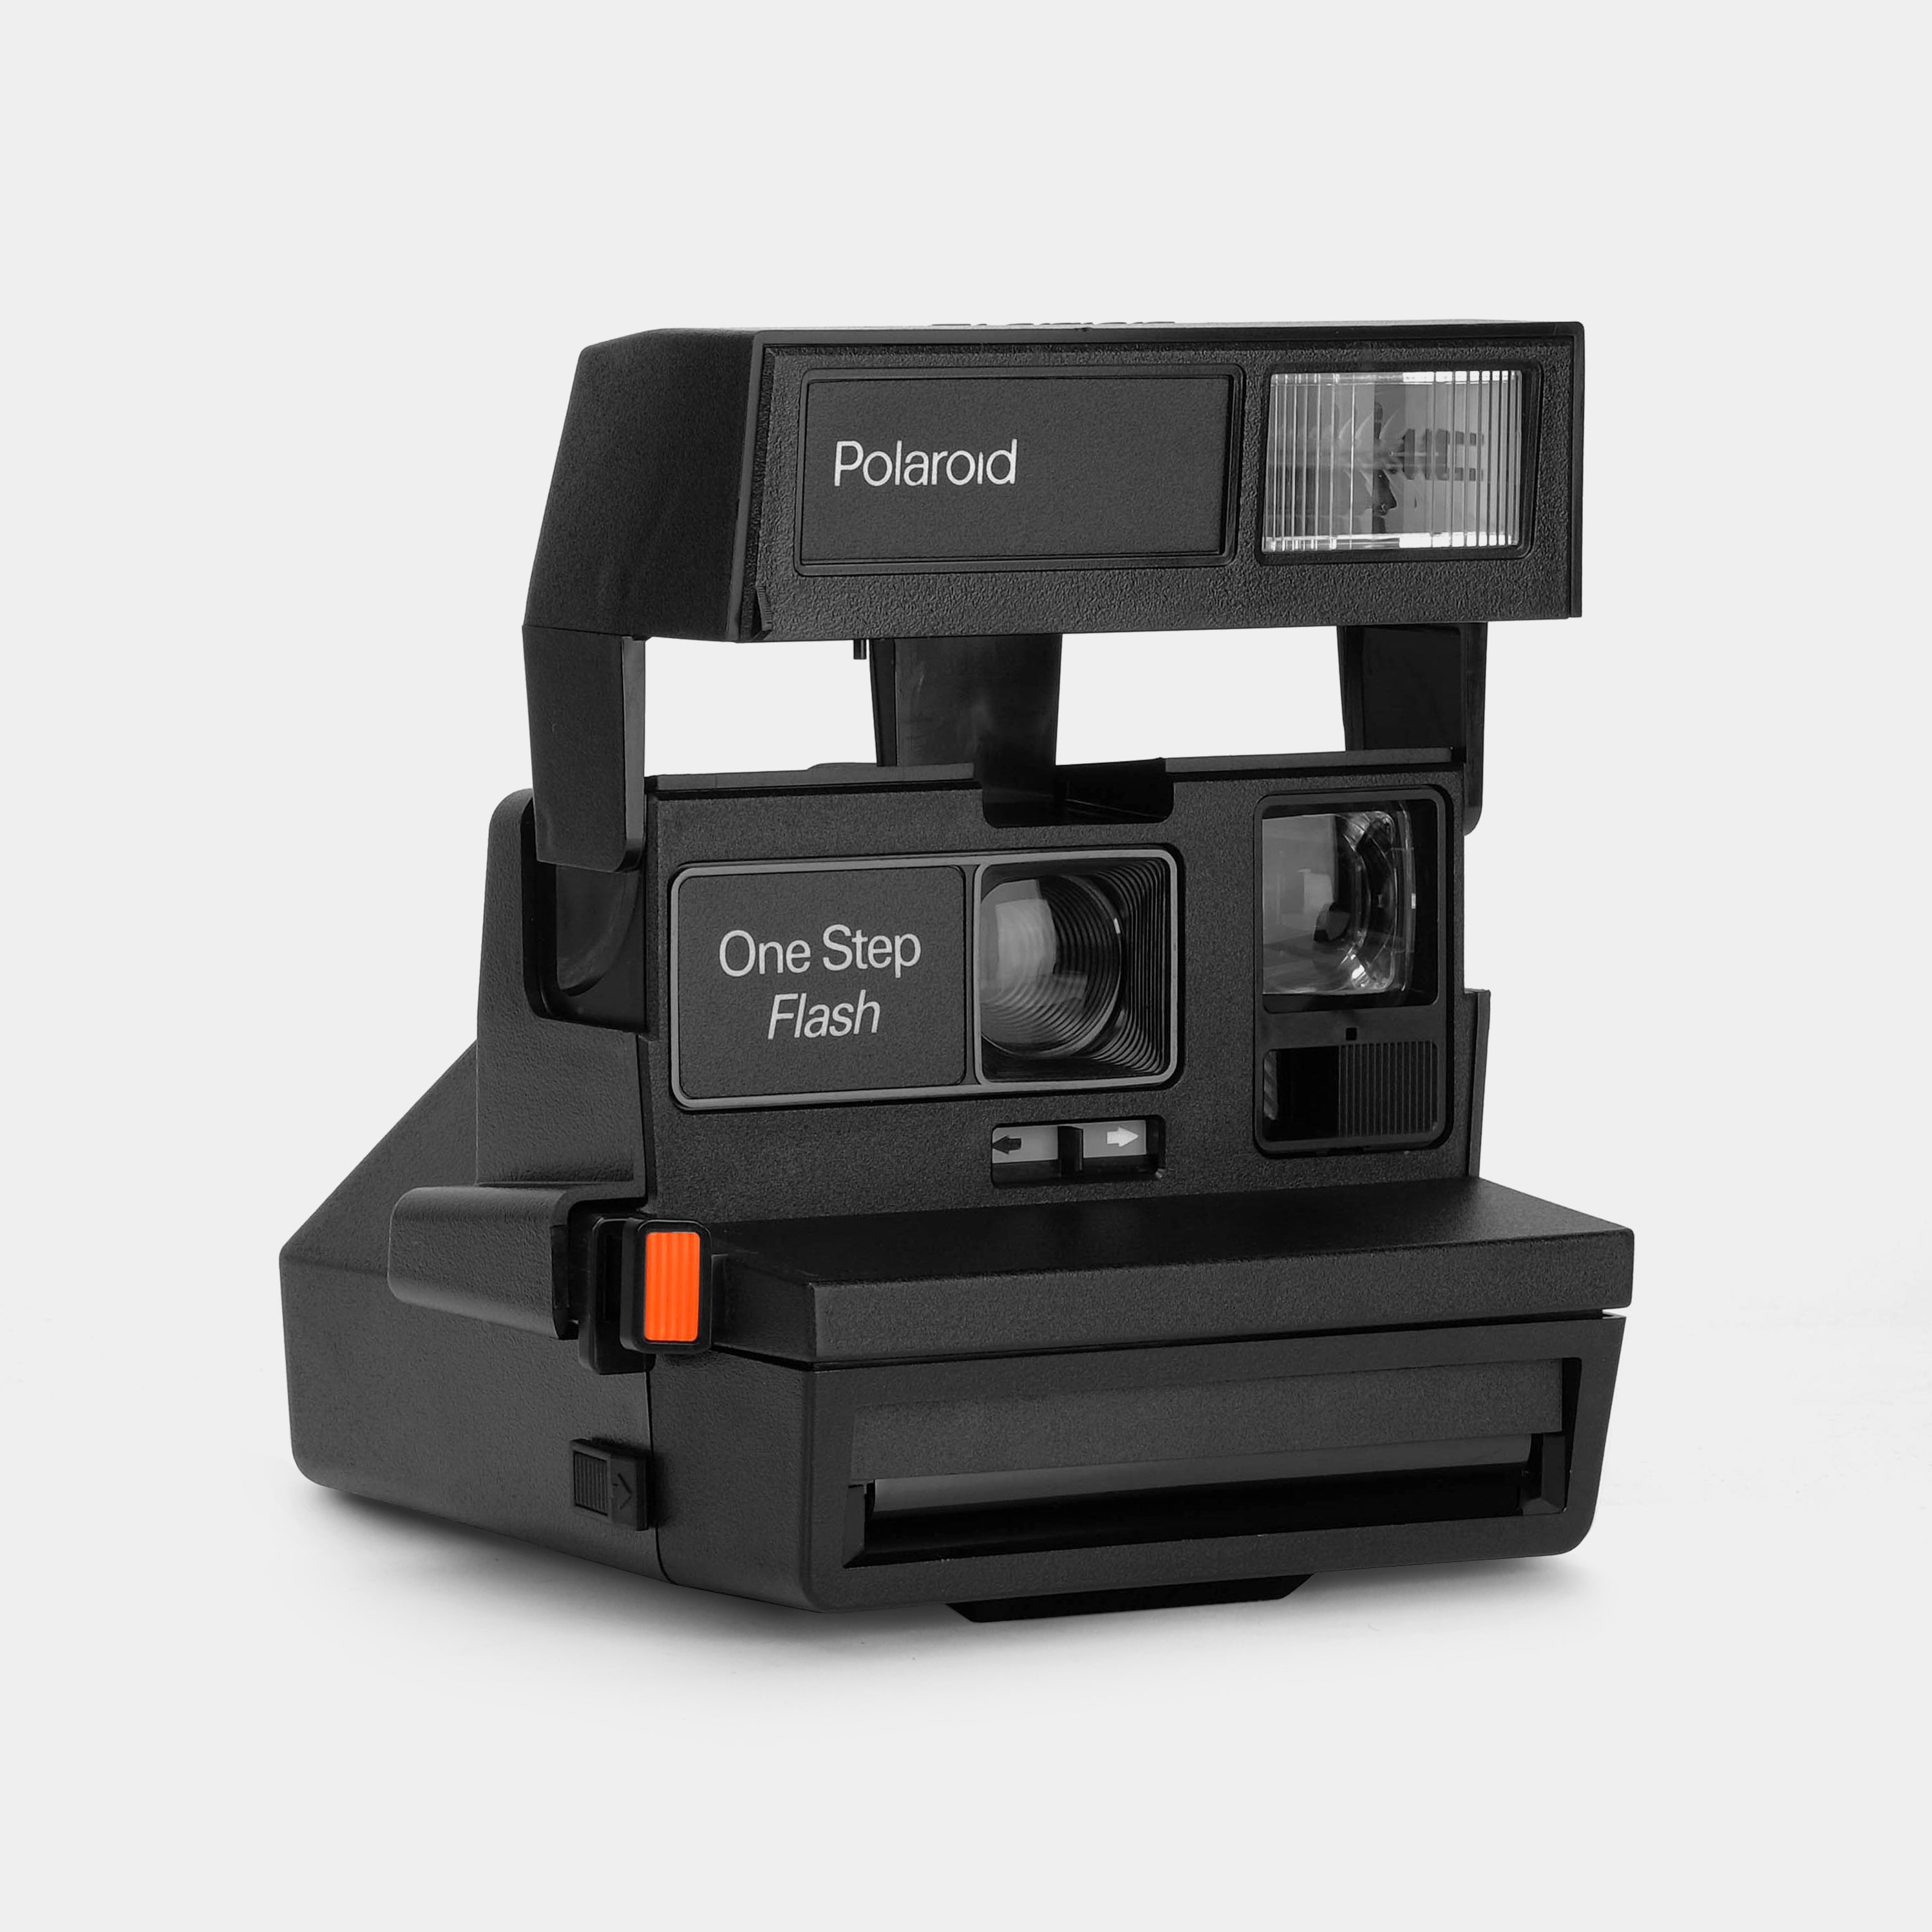 Refurbished and Restored Vintage Polaroid Cameras